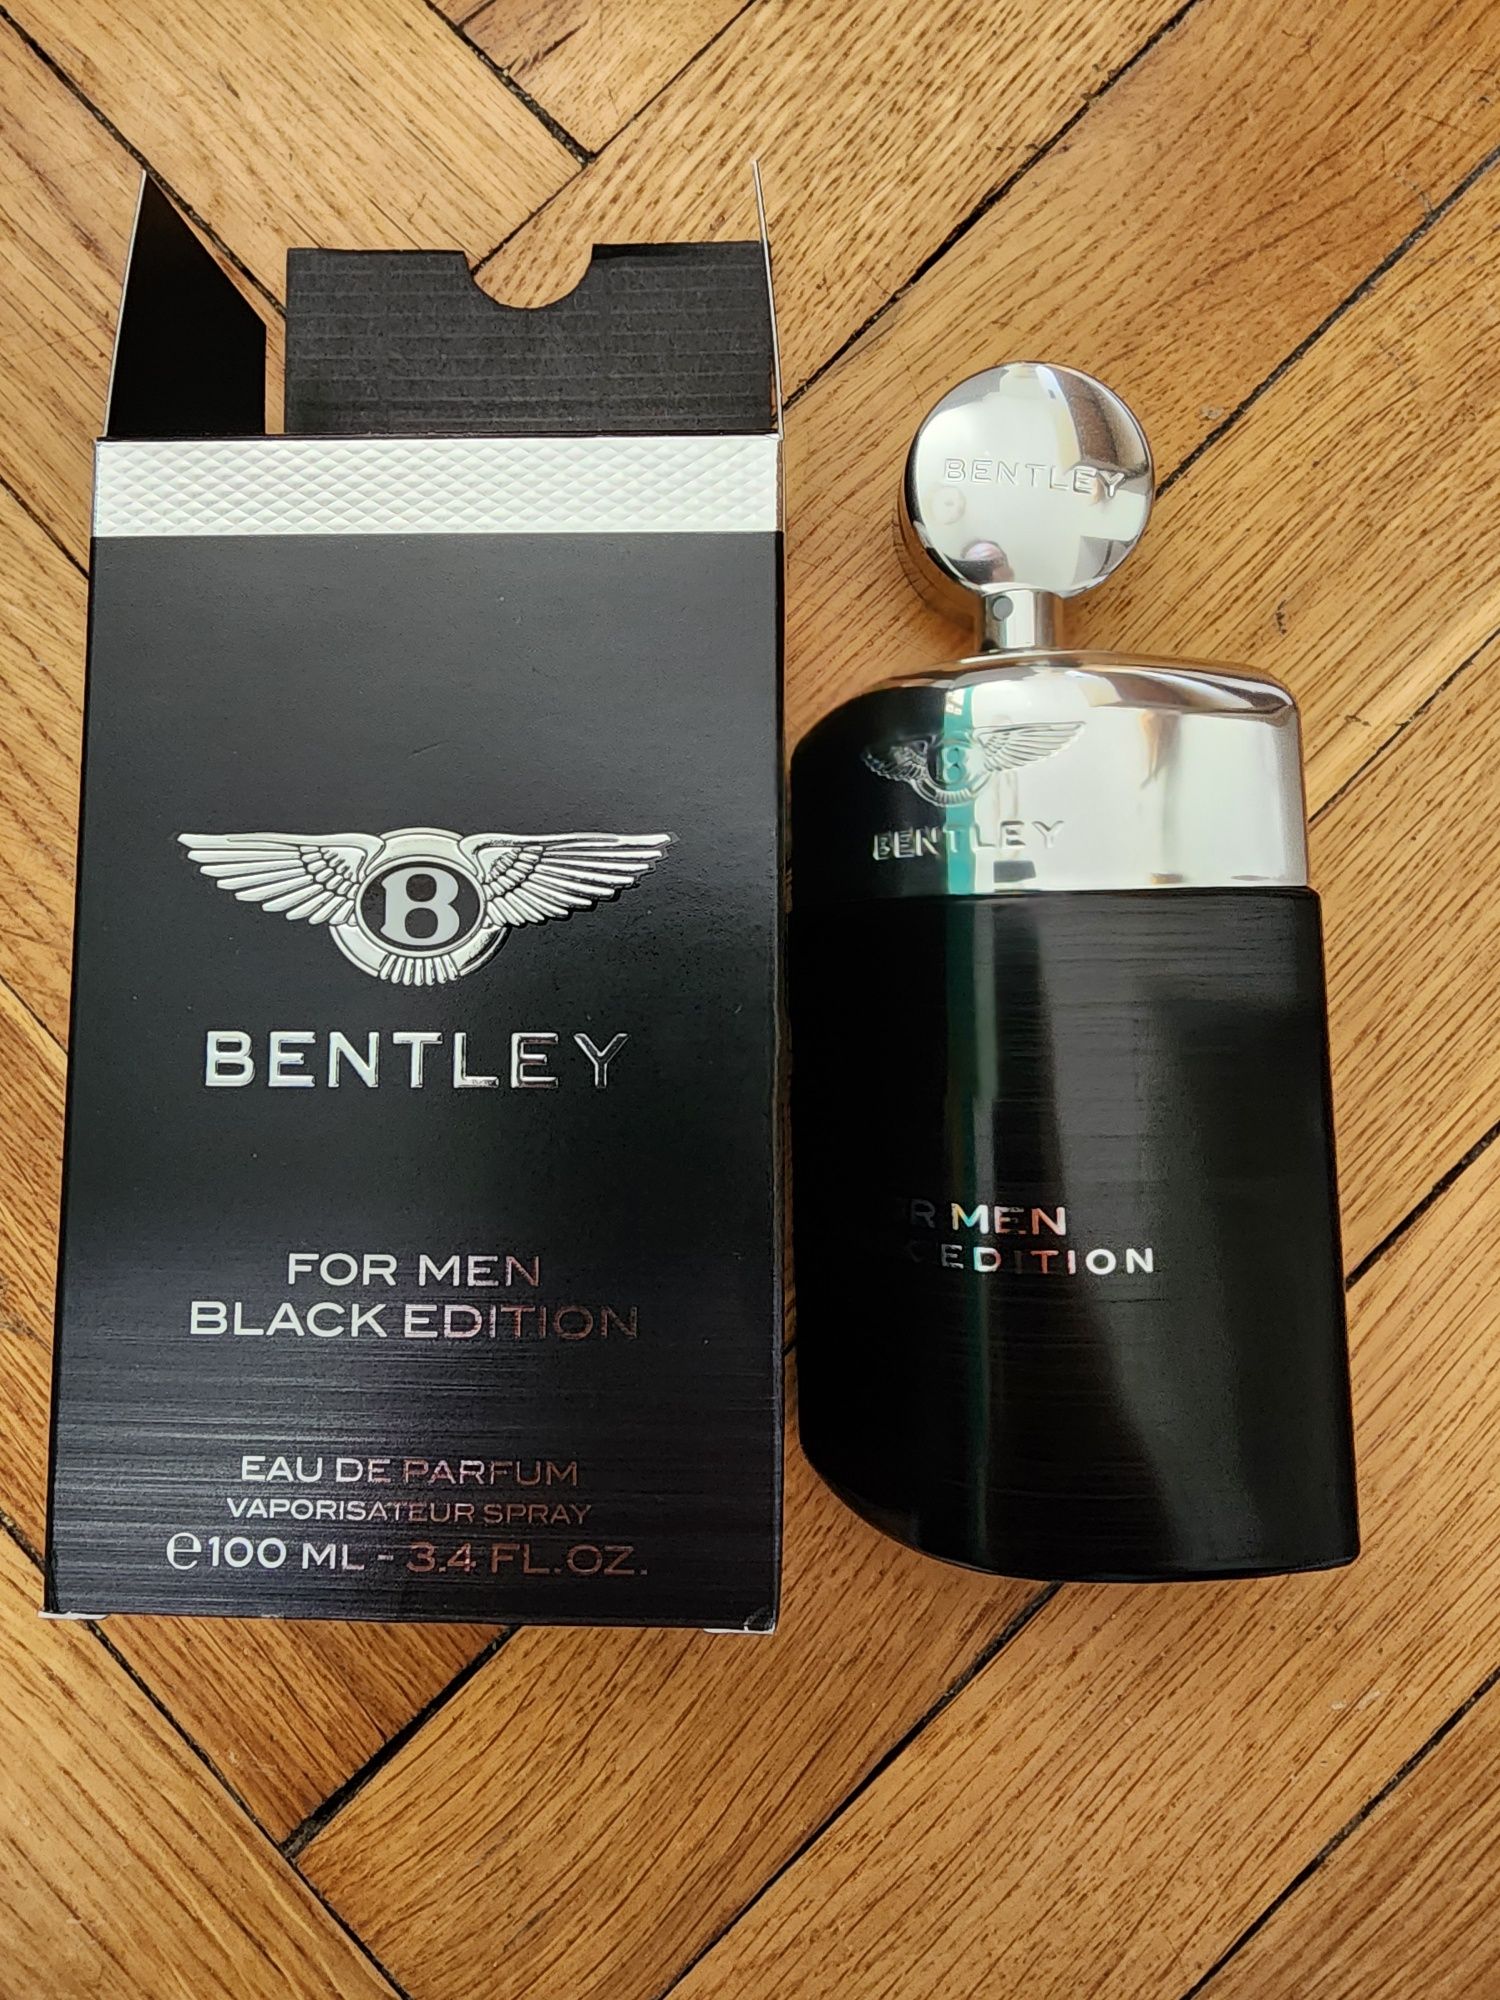 Bentley for Men Black Edition